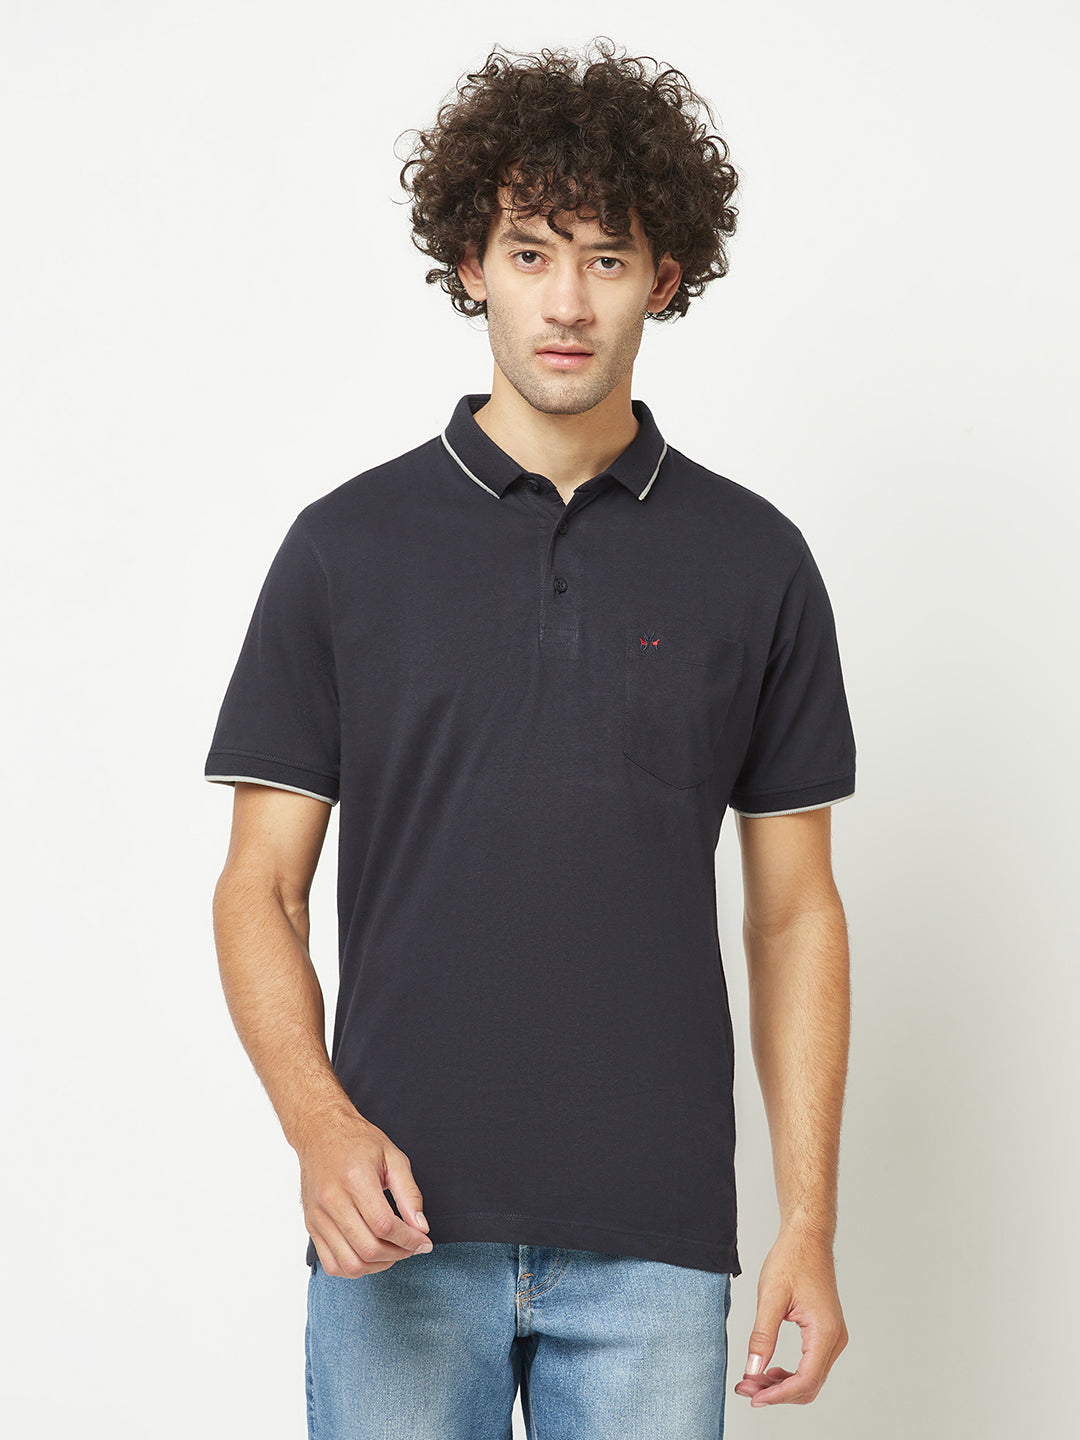  Plain Navy Blue Polo T-Shirt